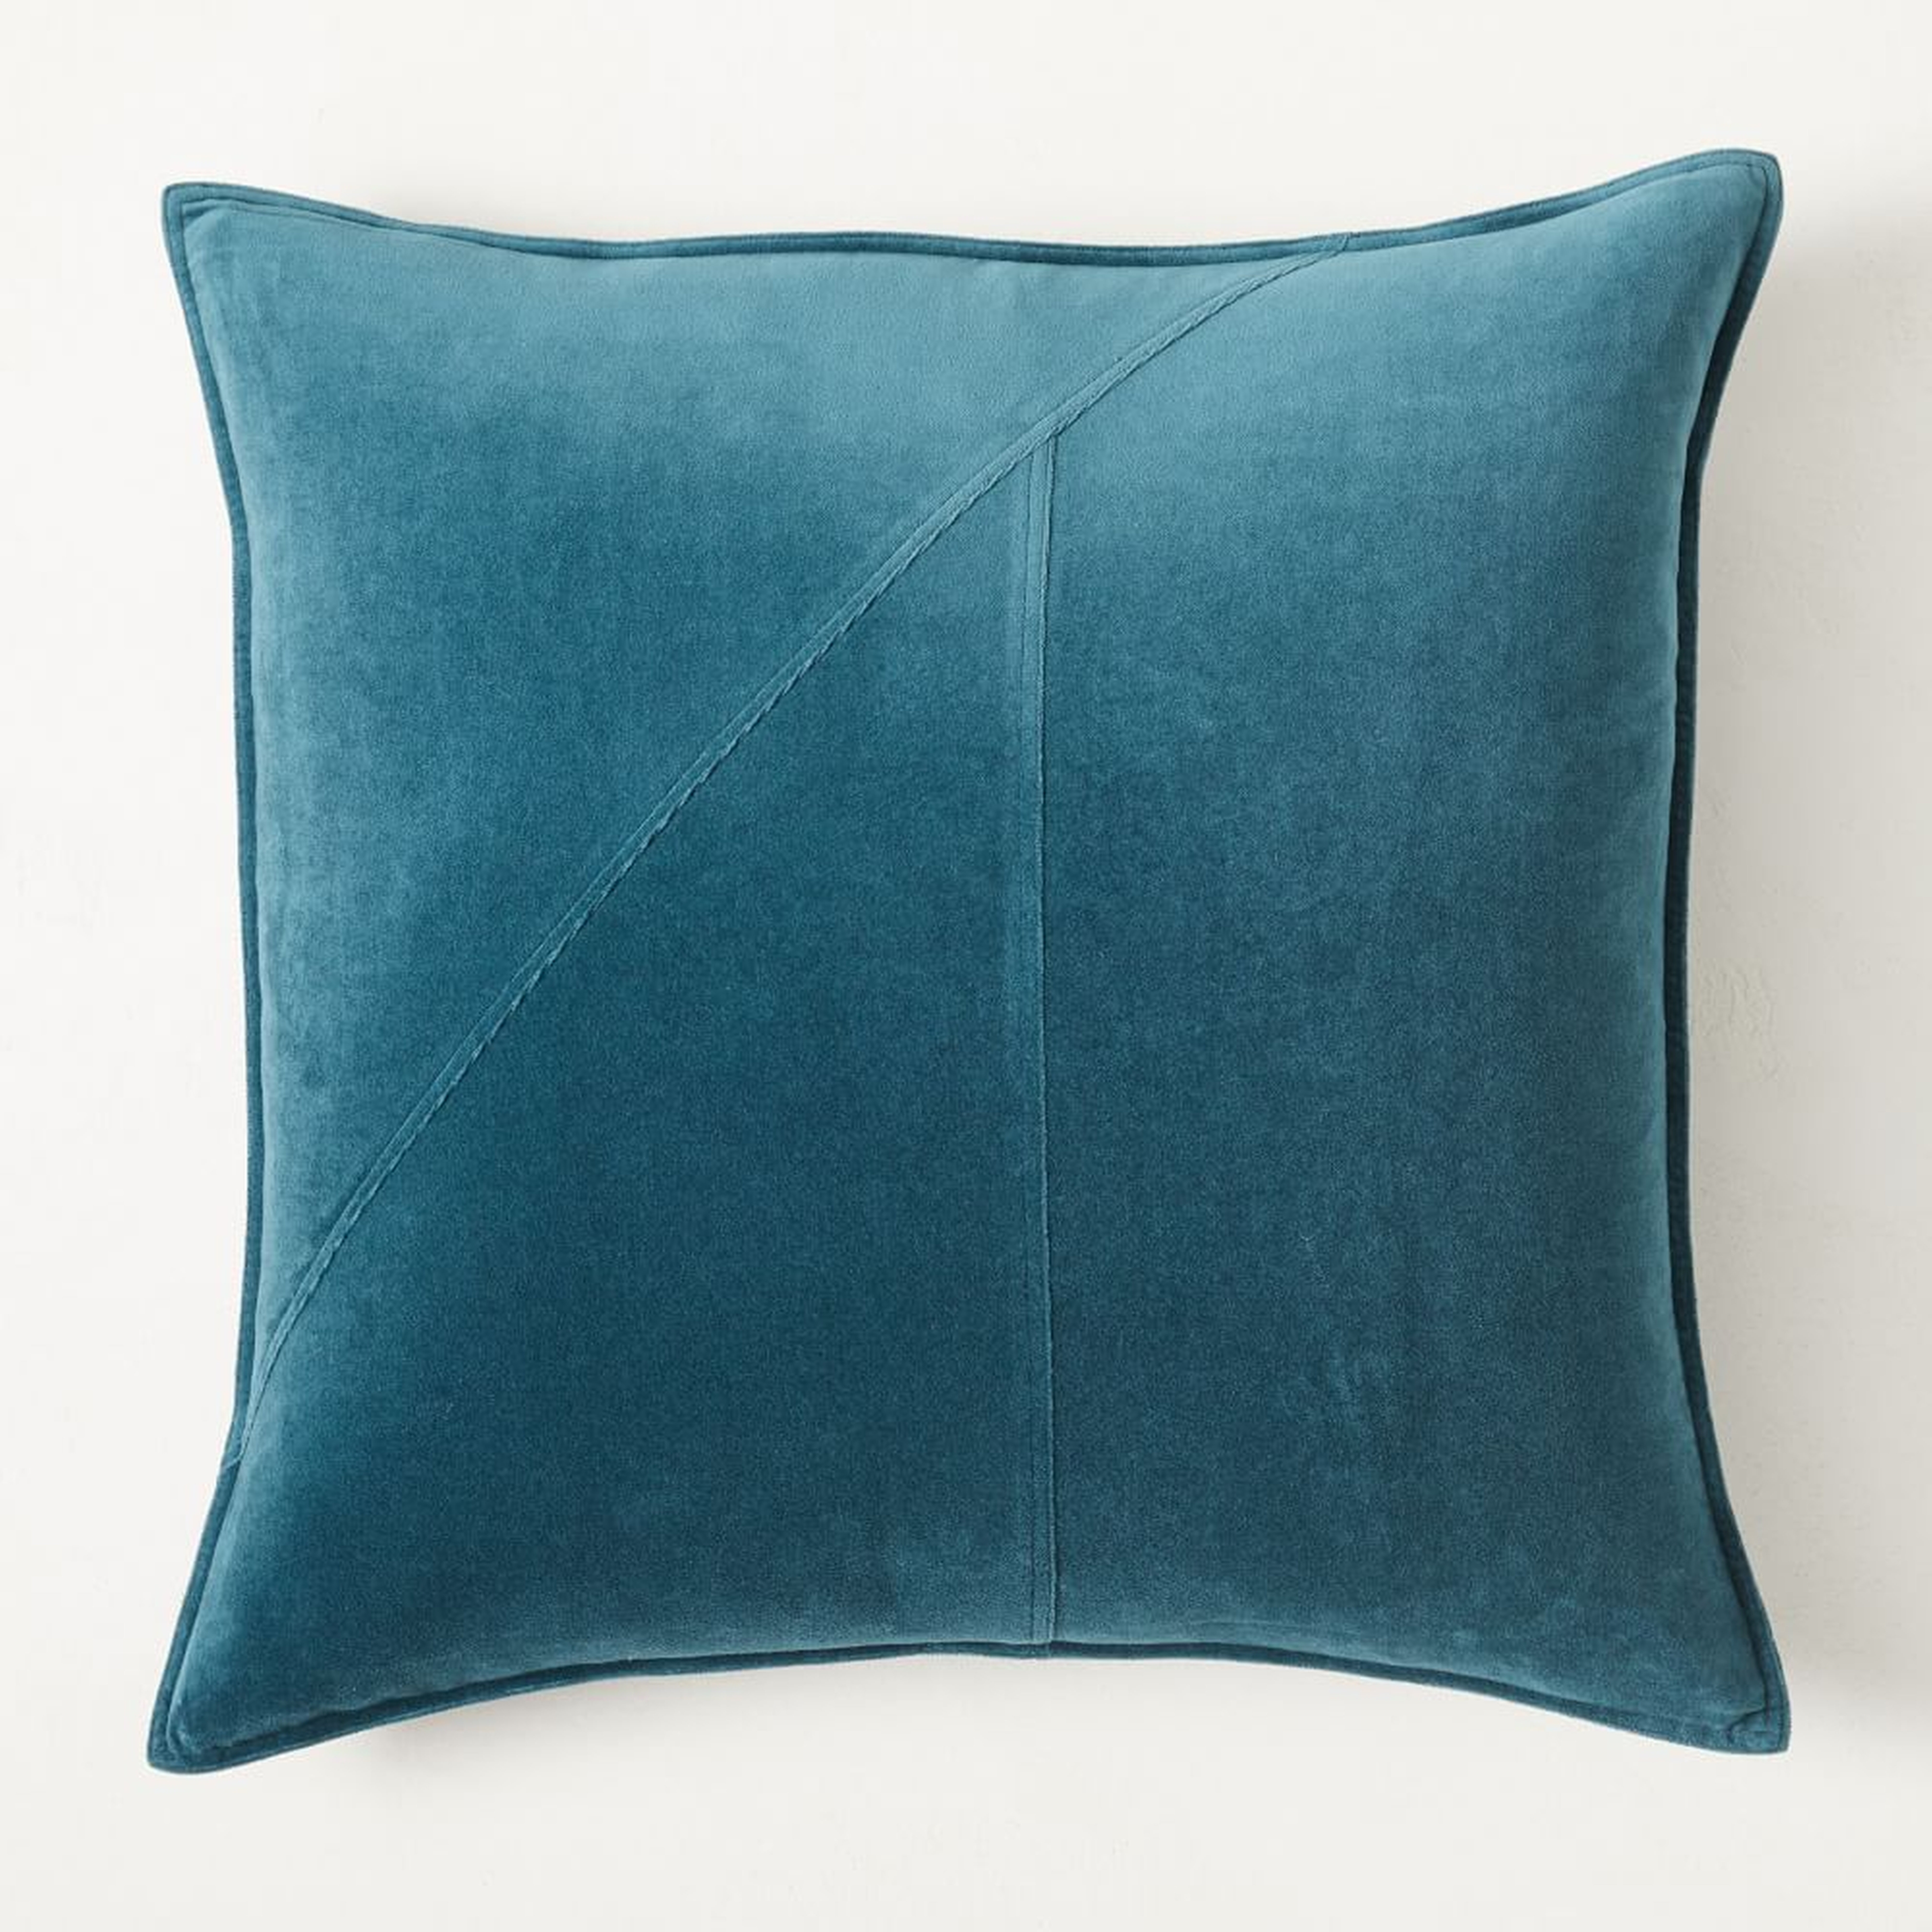 Washed Cotton Velvet Pillow Cover, 24"x24", Blue Teal - West Elm